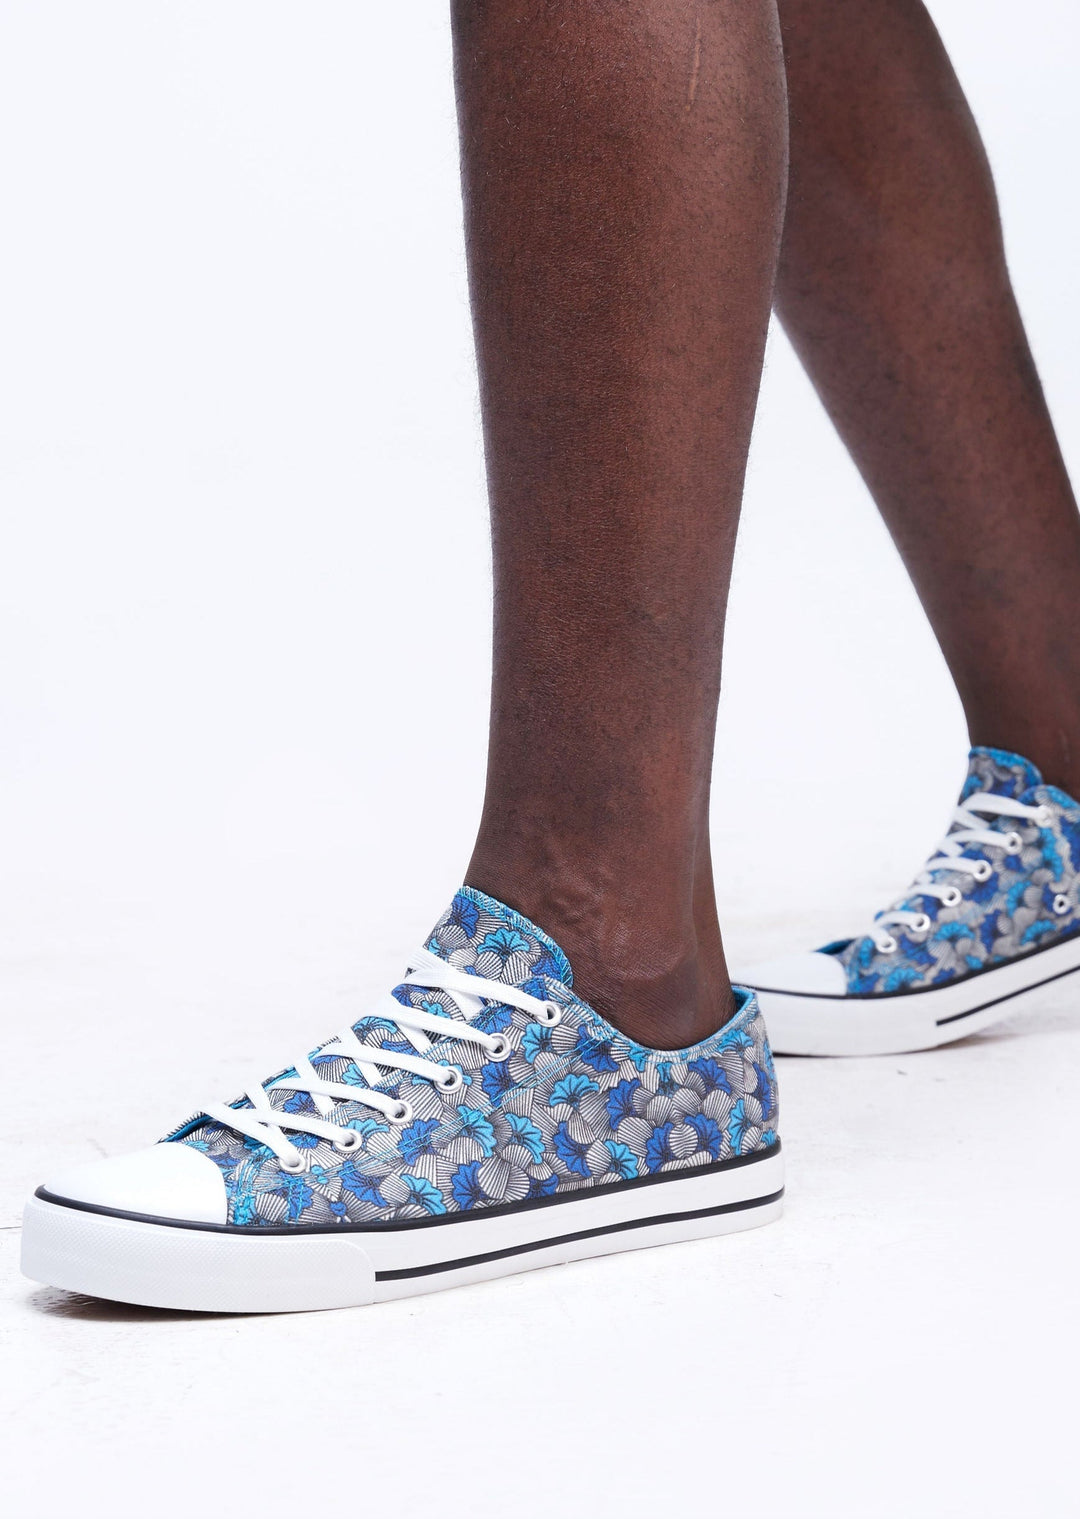 Sneaker ‚Samawati‘ aus Canvas-Stoff für 88€ - mikono.africa Jacken aus Kenia bunte Bomberjacke Partyjacke faire sozial nachhaltig designed in Kenia